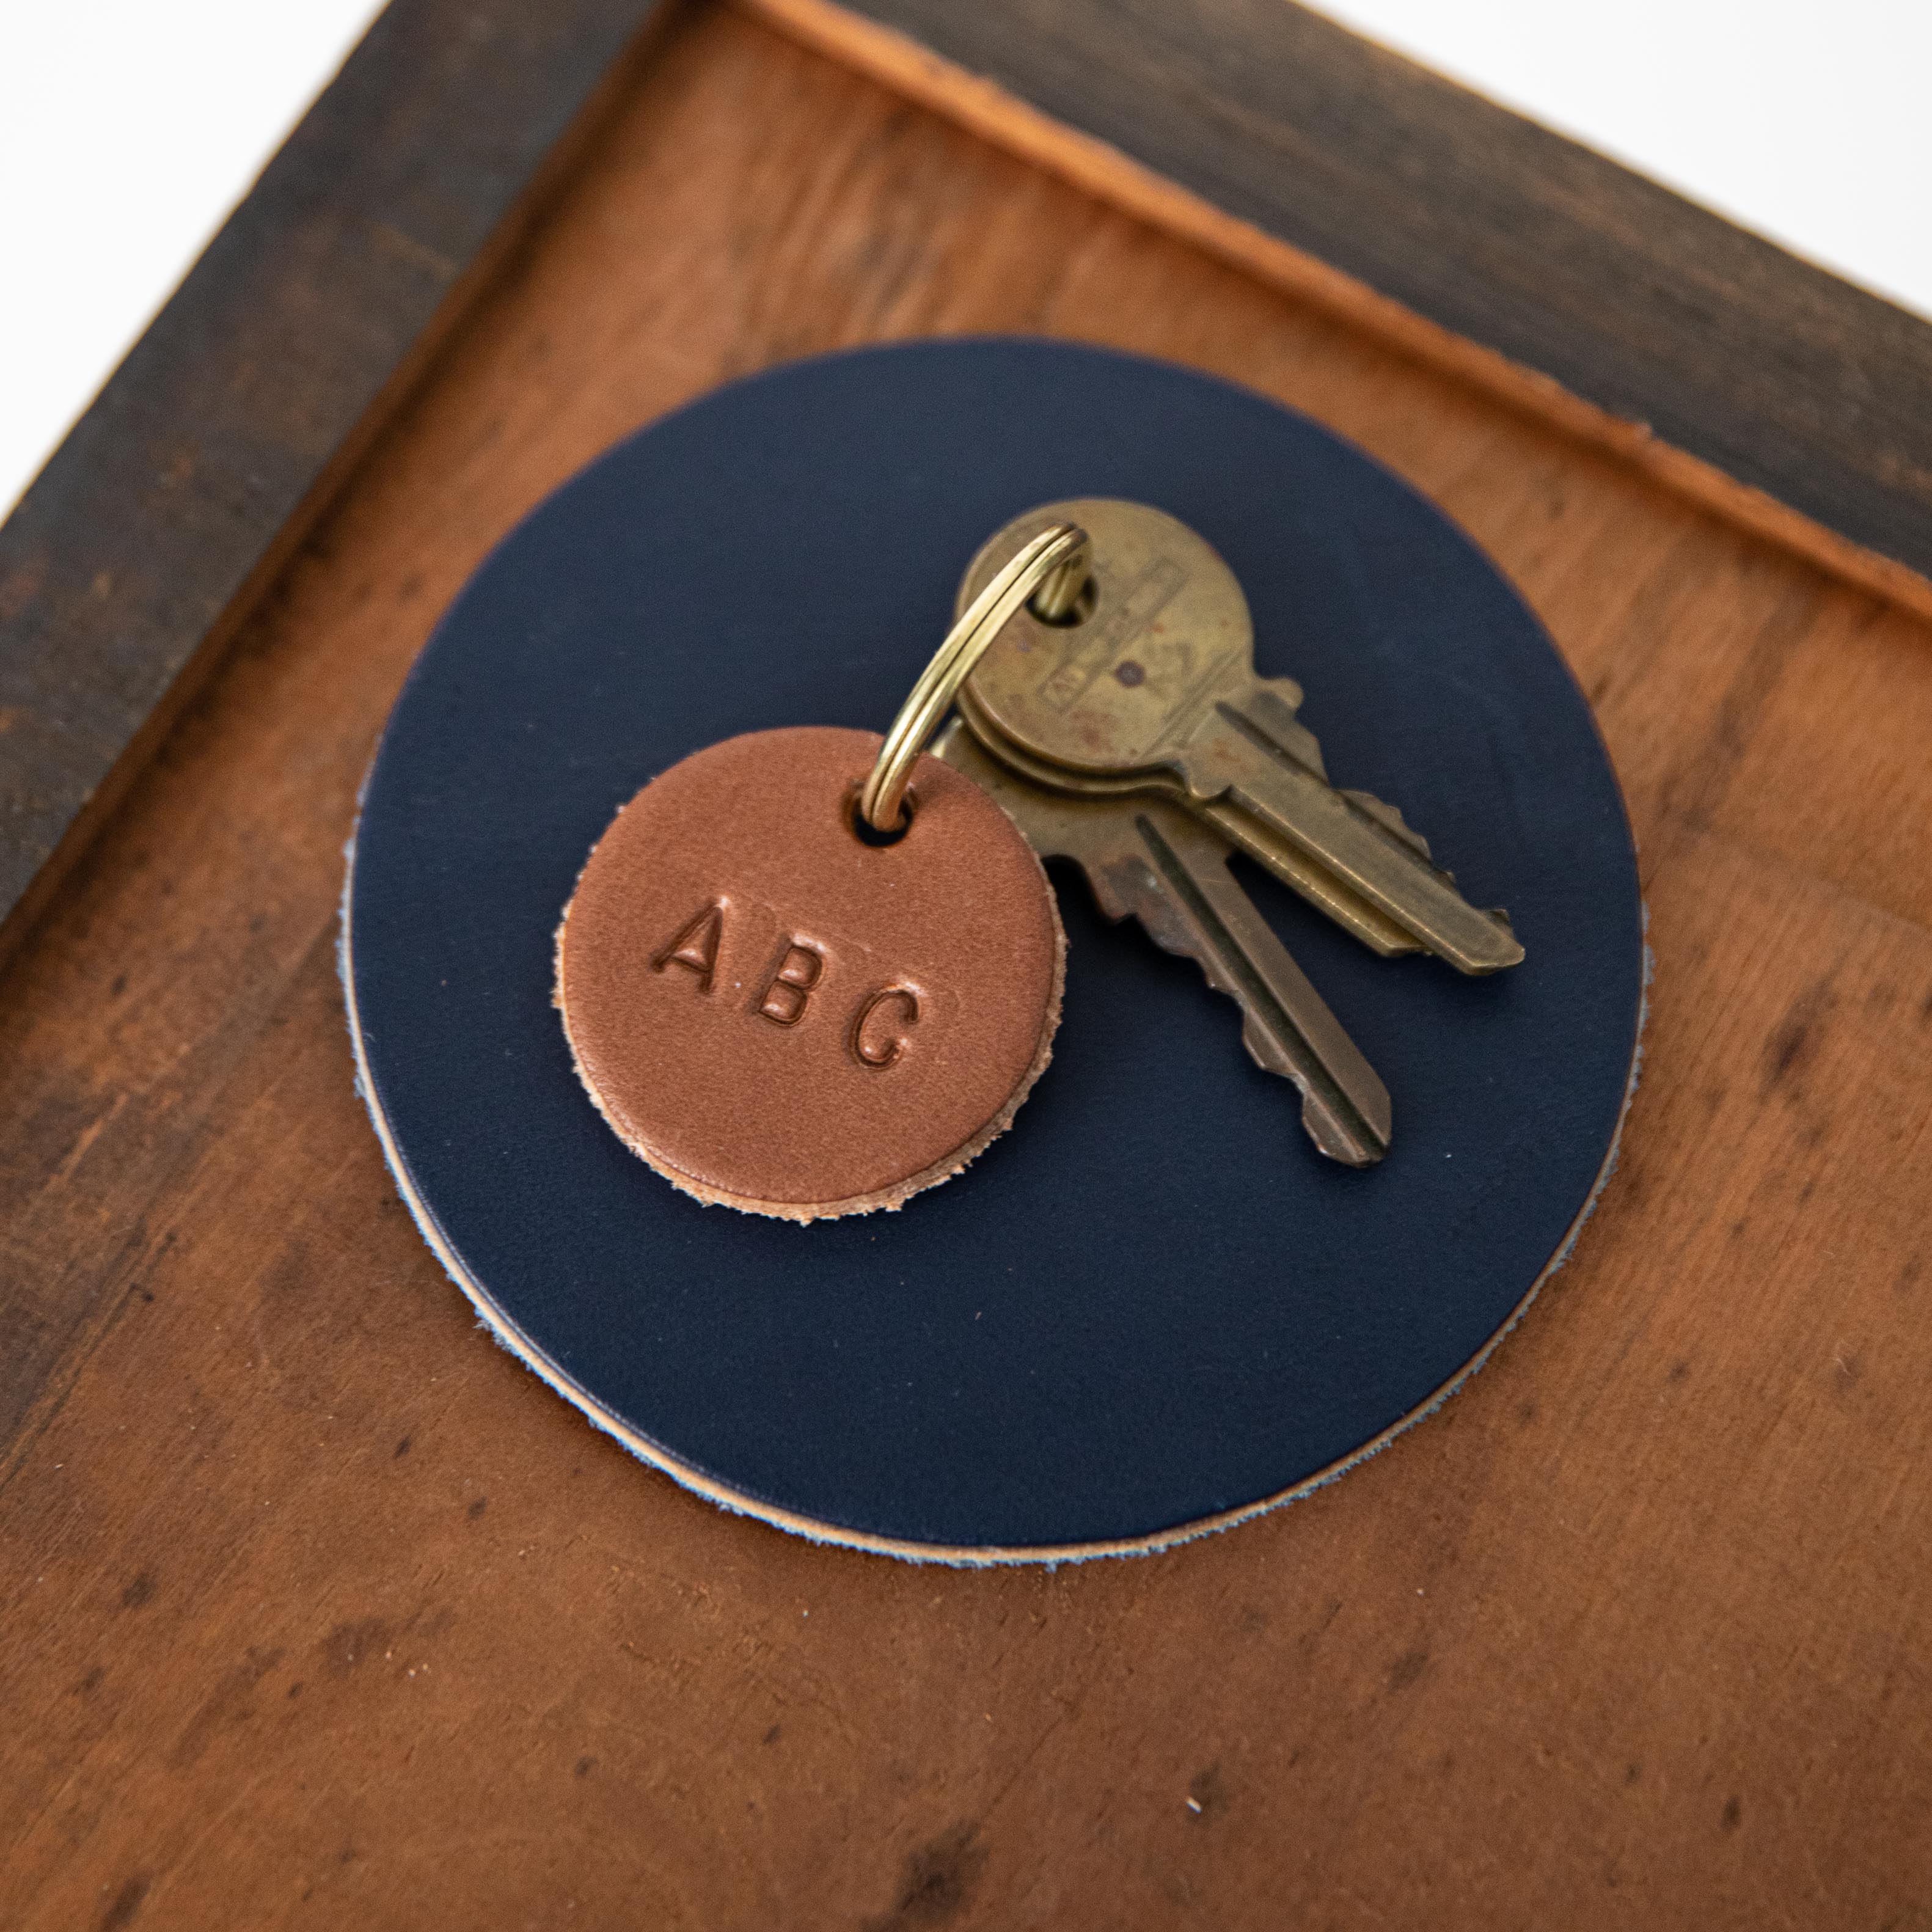 Yellow Circle Key Fob- leather keychain - leather key holder - leather key fob - KMM &amp; Co.